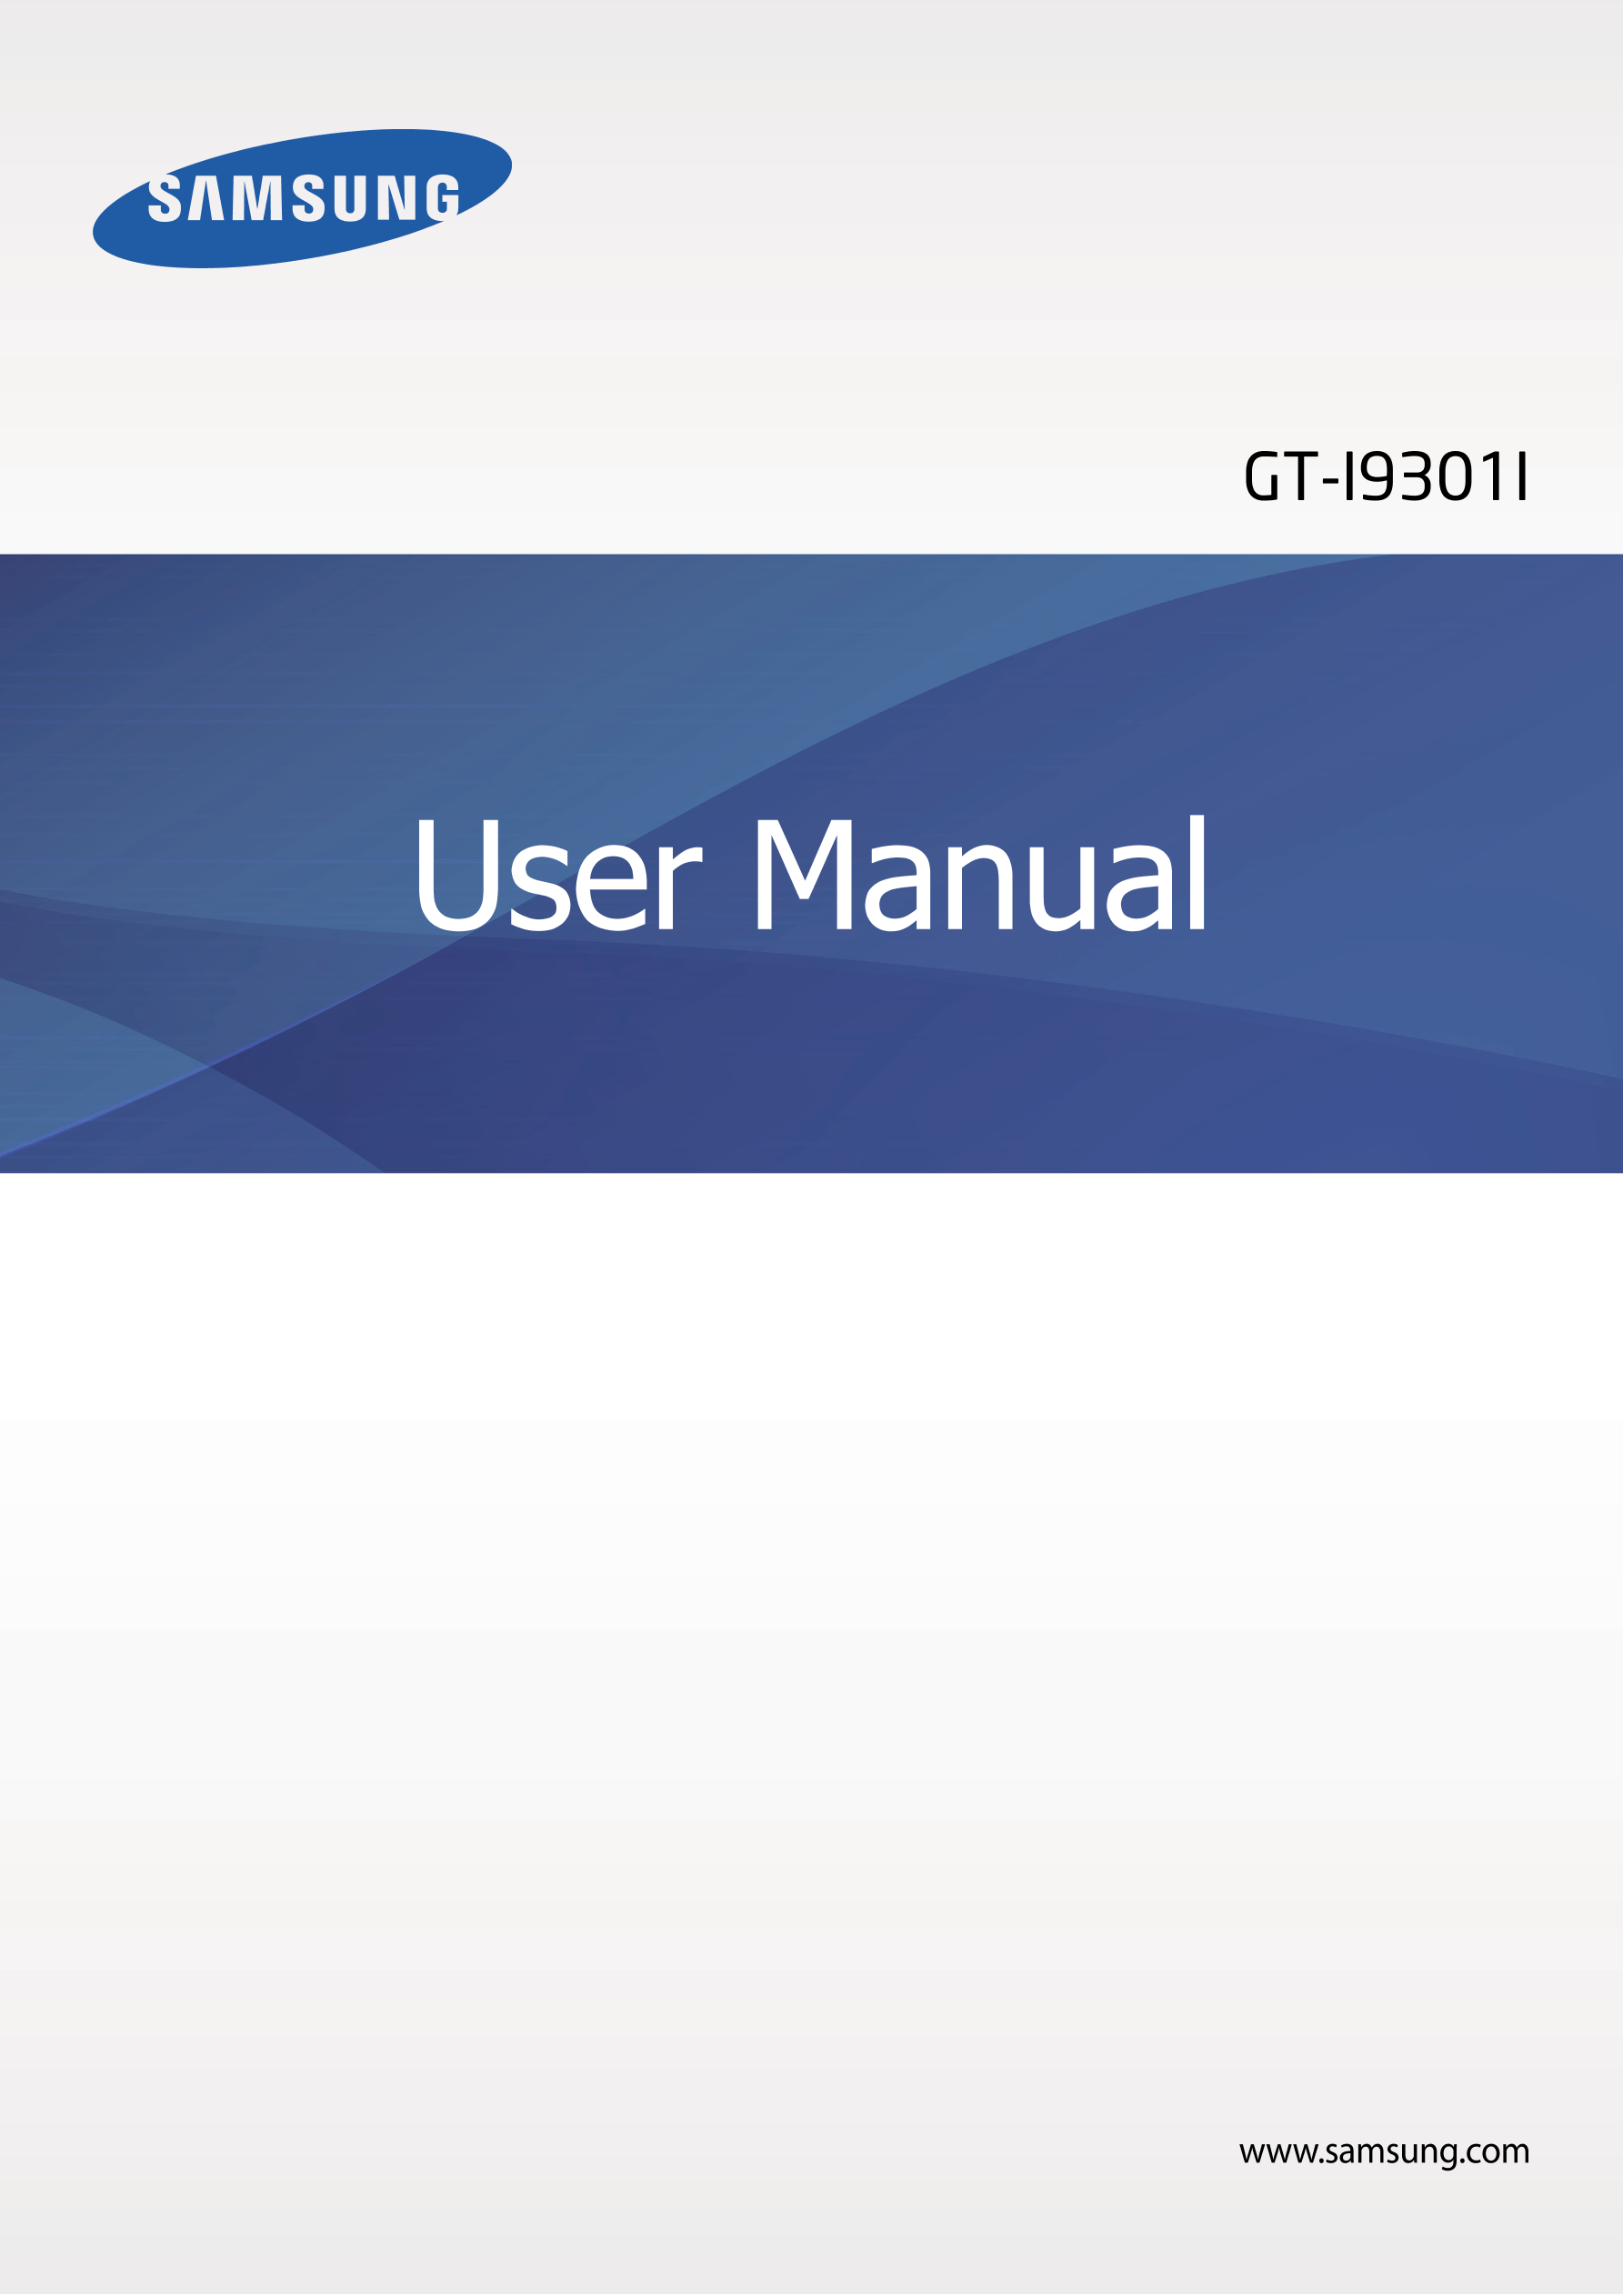 GT-I9301I
User Manual
www.samsung.com